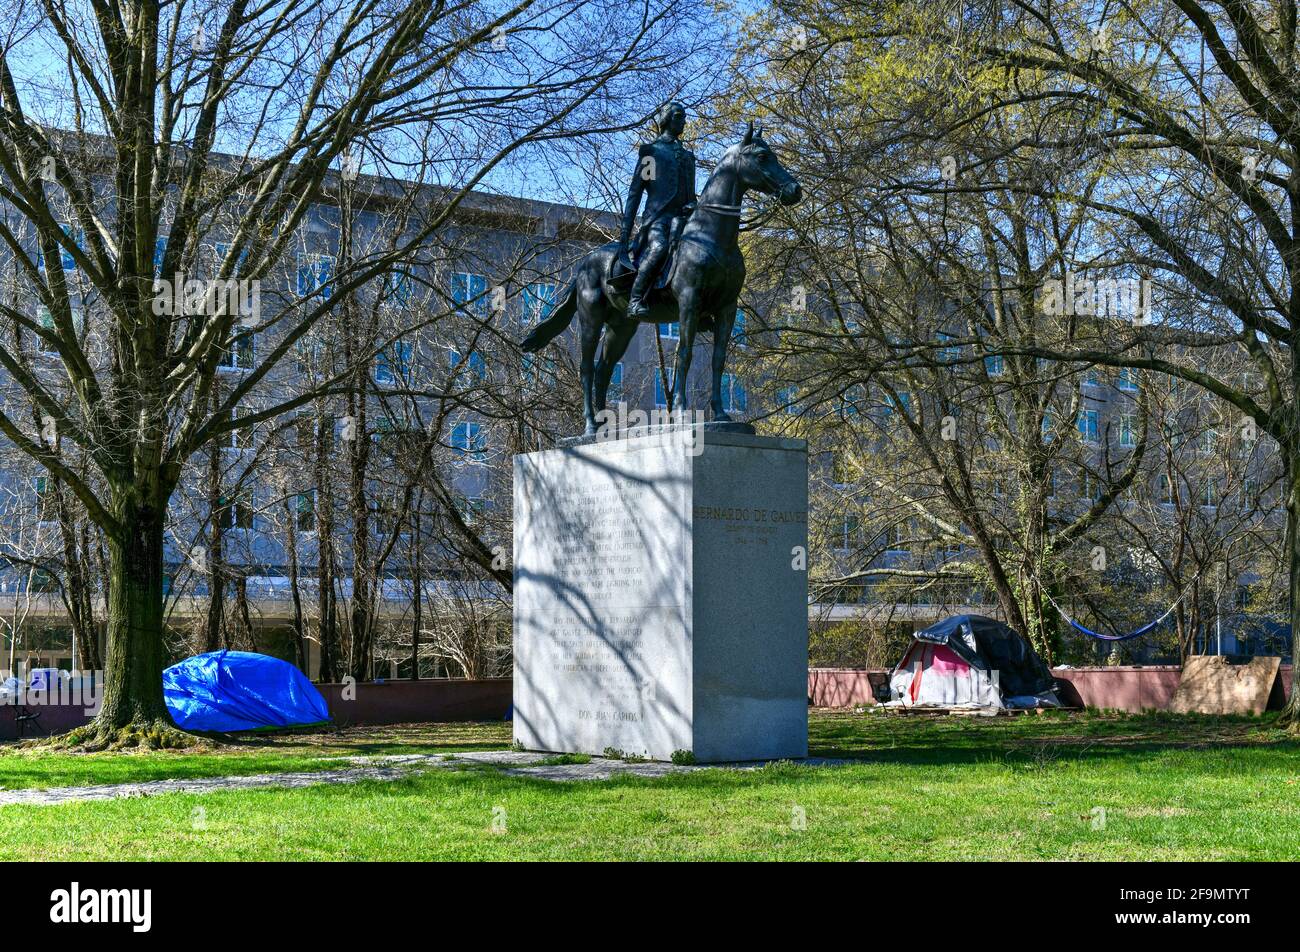 Washington, DC - Apr 3, 2021: Equestrian statue of Bernardo de Galvez in the Foggy Bottom neighborhood of Washington, DC. Stock Photo